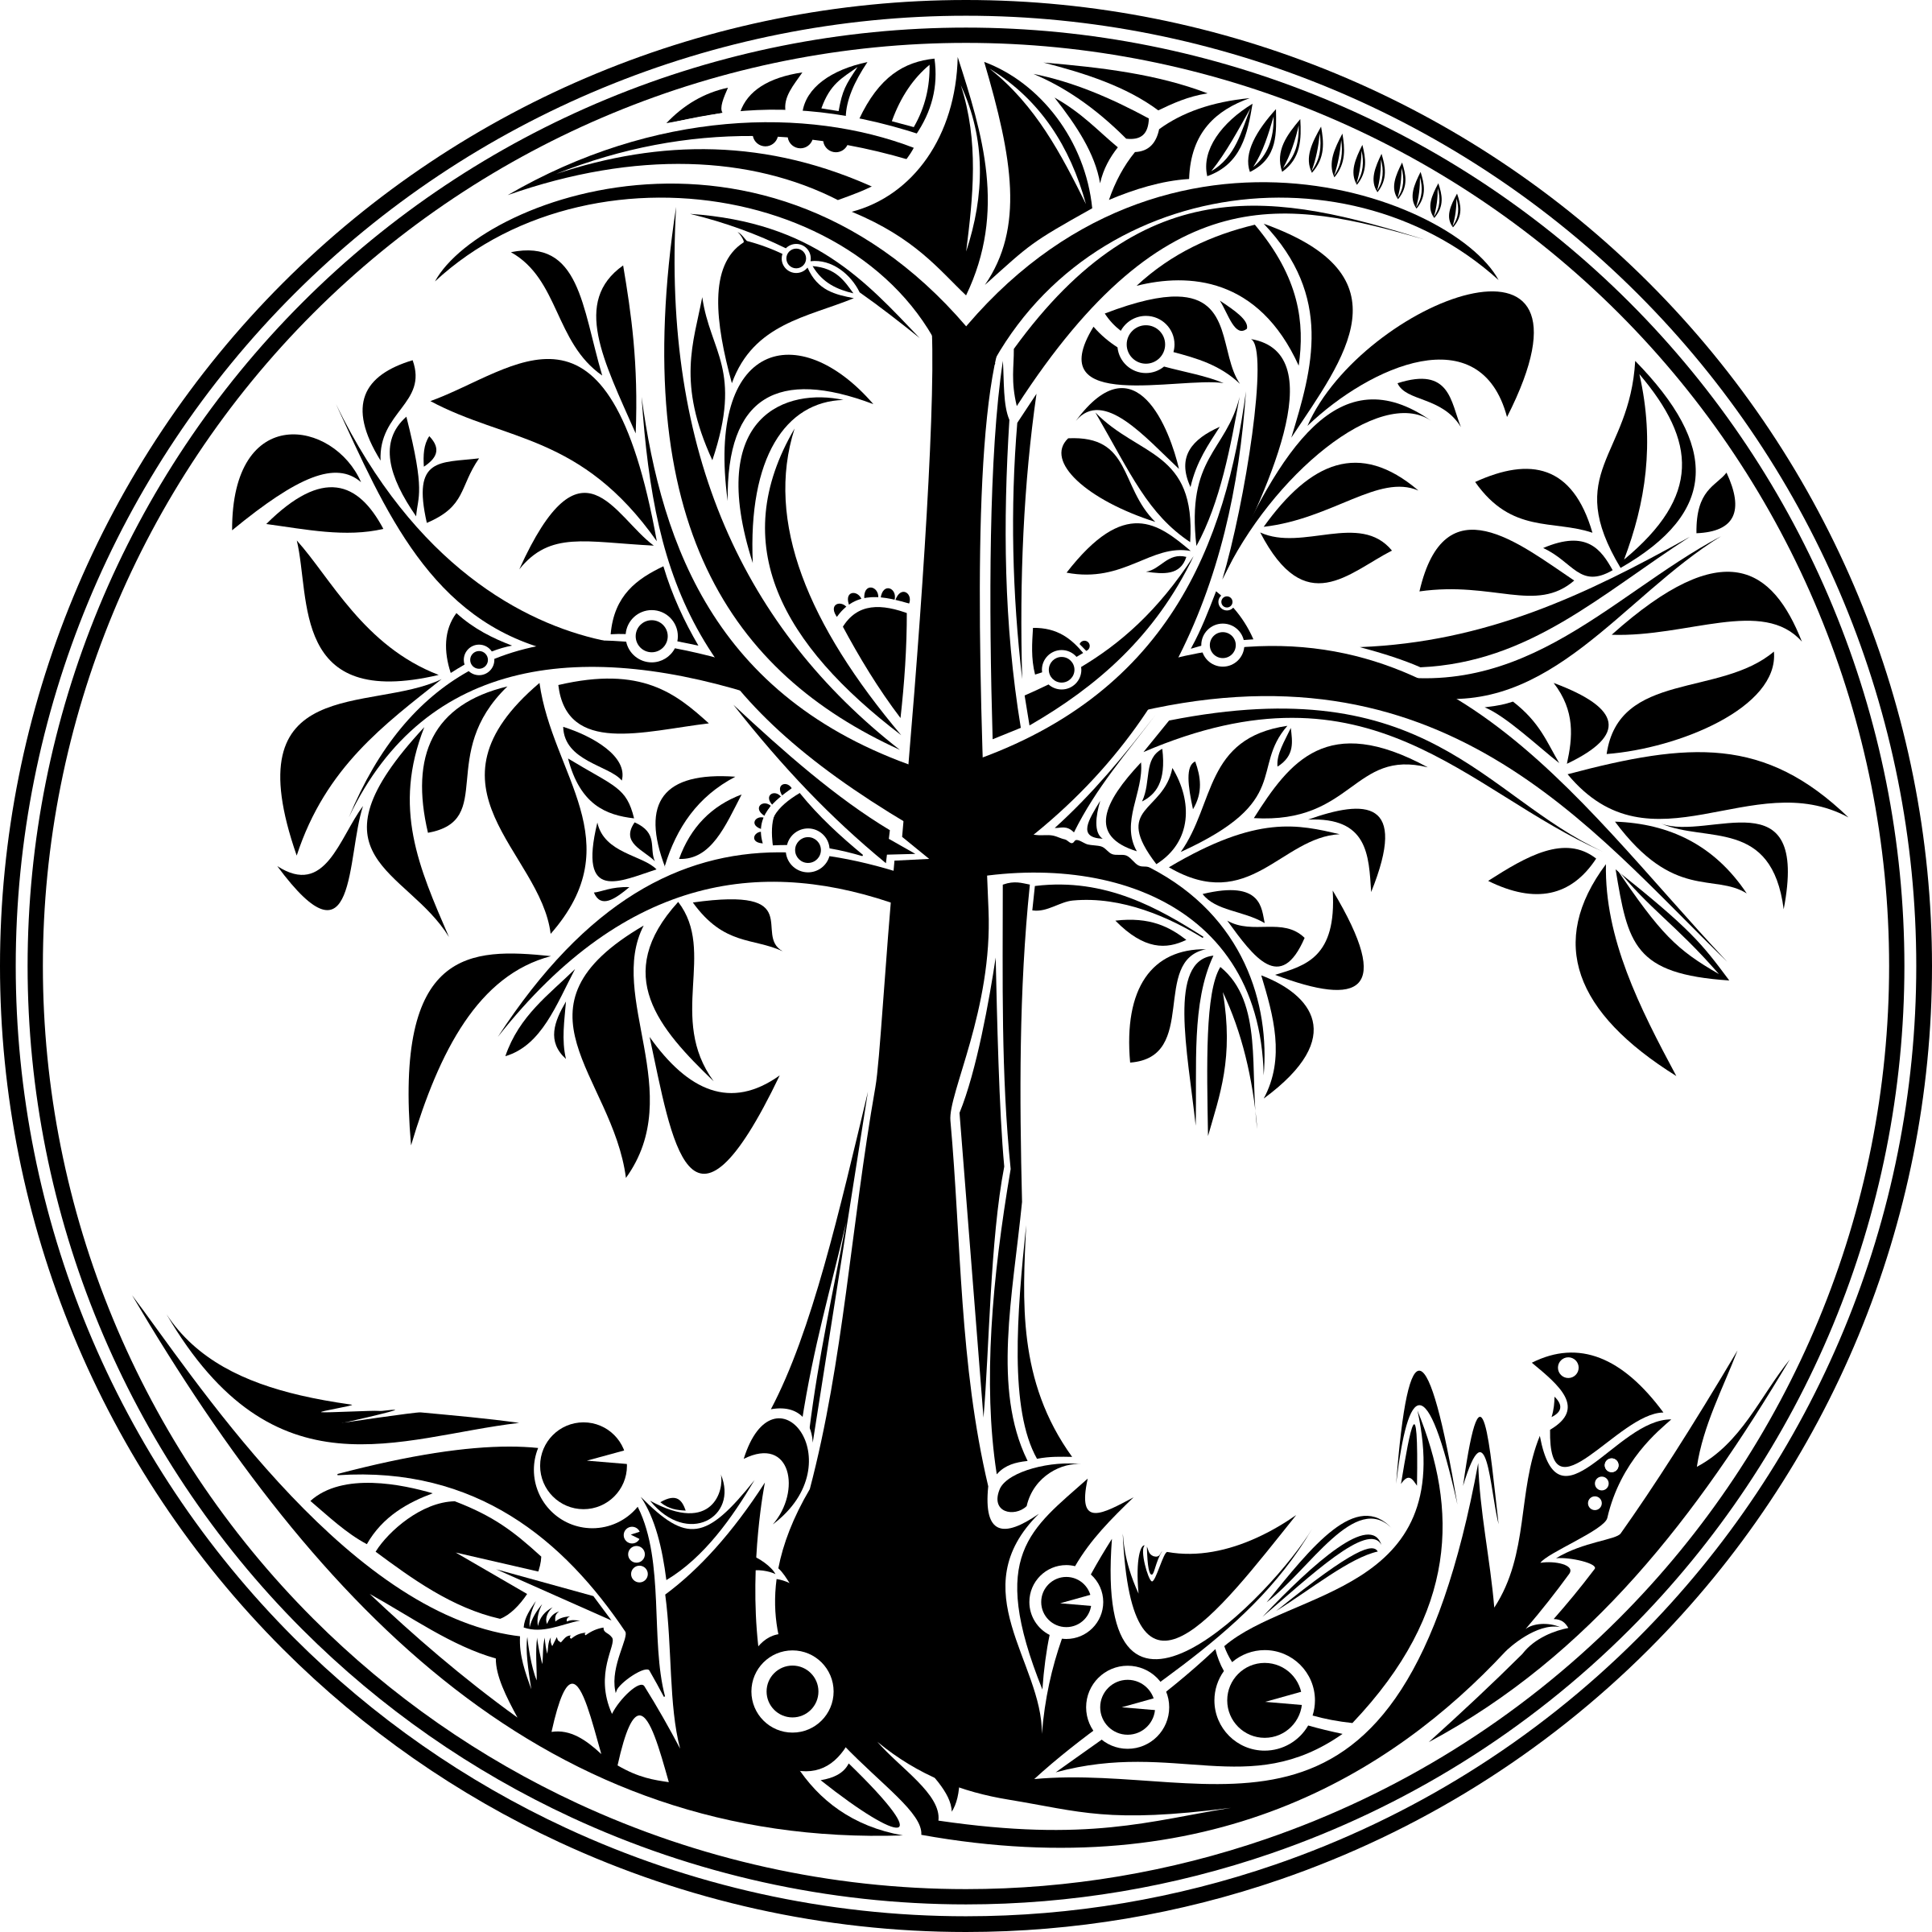 tree of life symbol simple